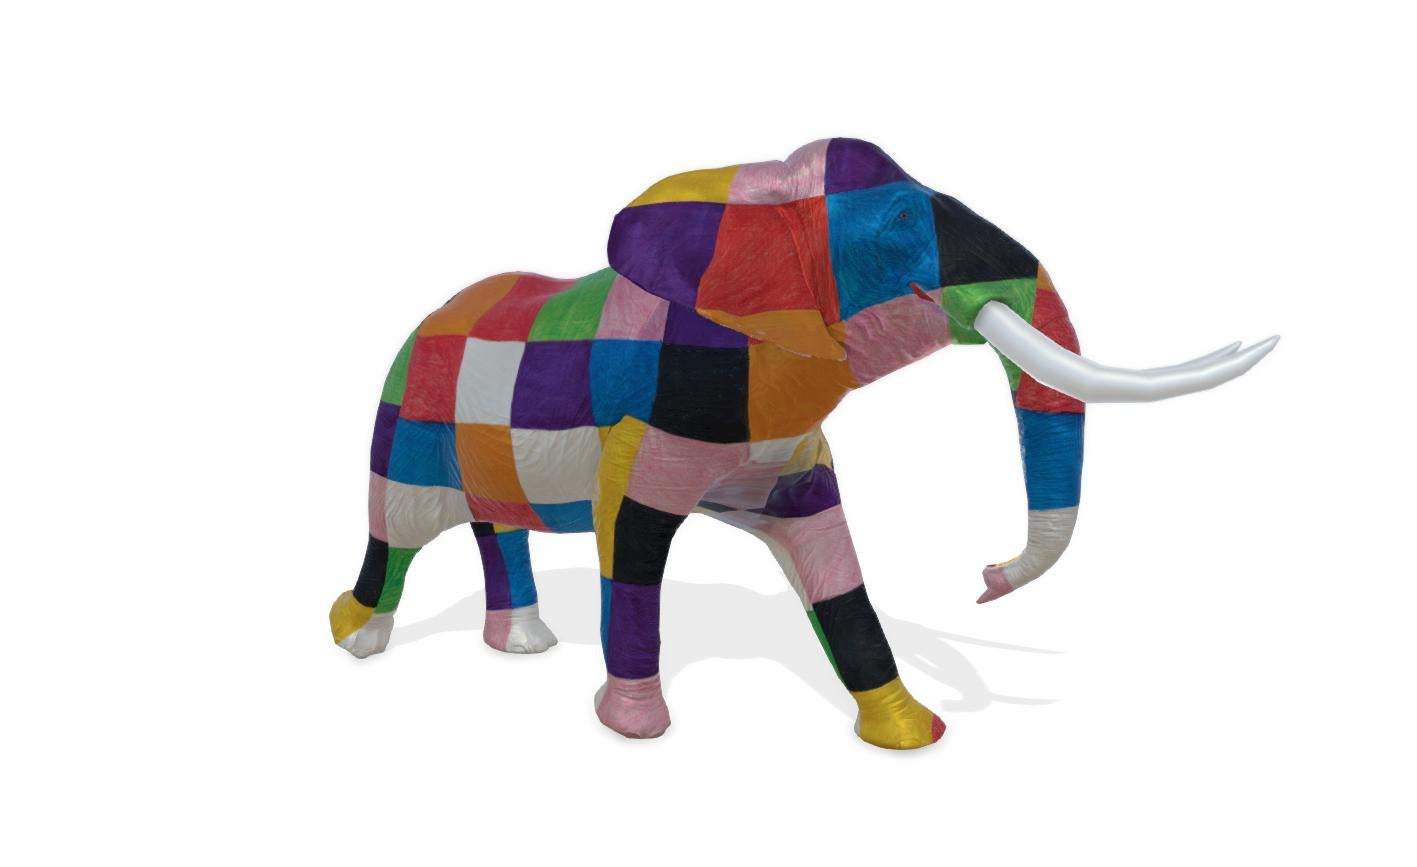 Elmer the Patchwork elephant is preparing to trek across billboards